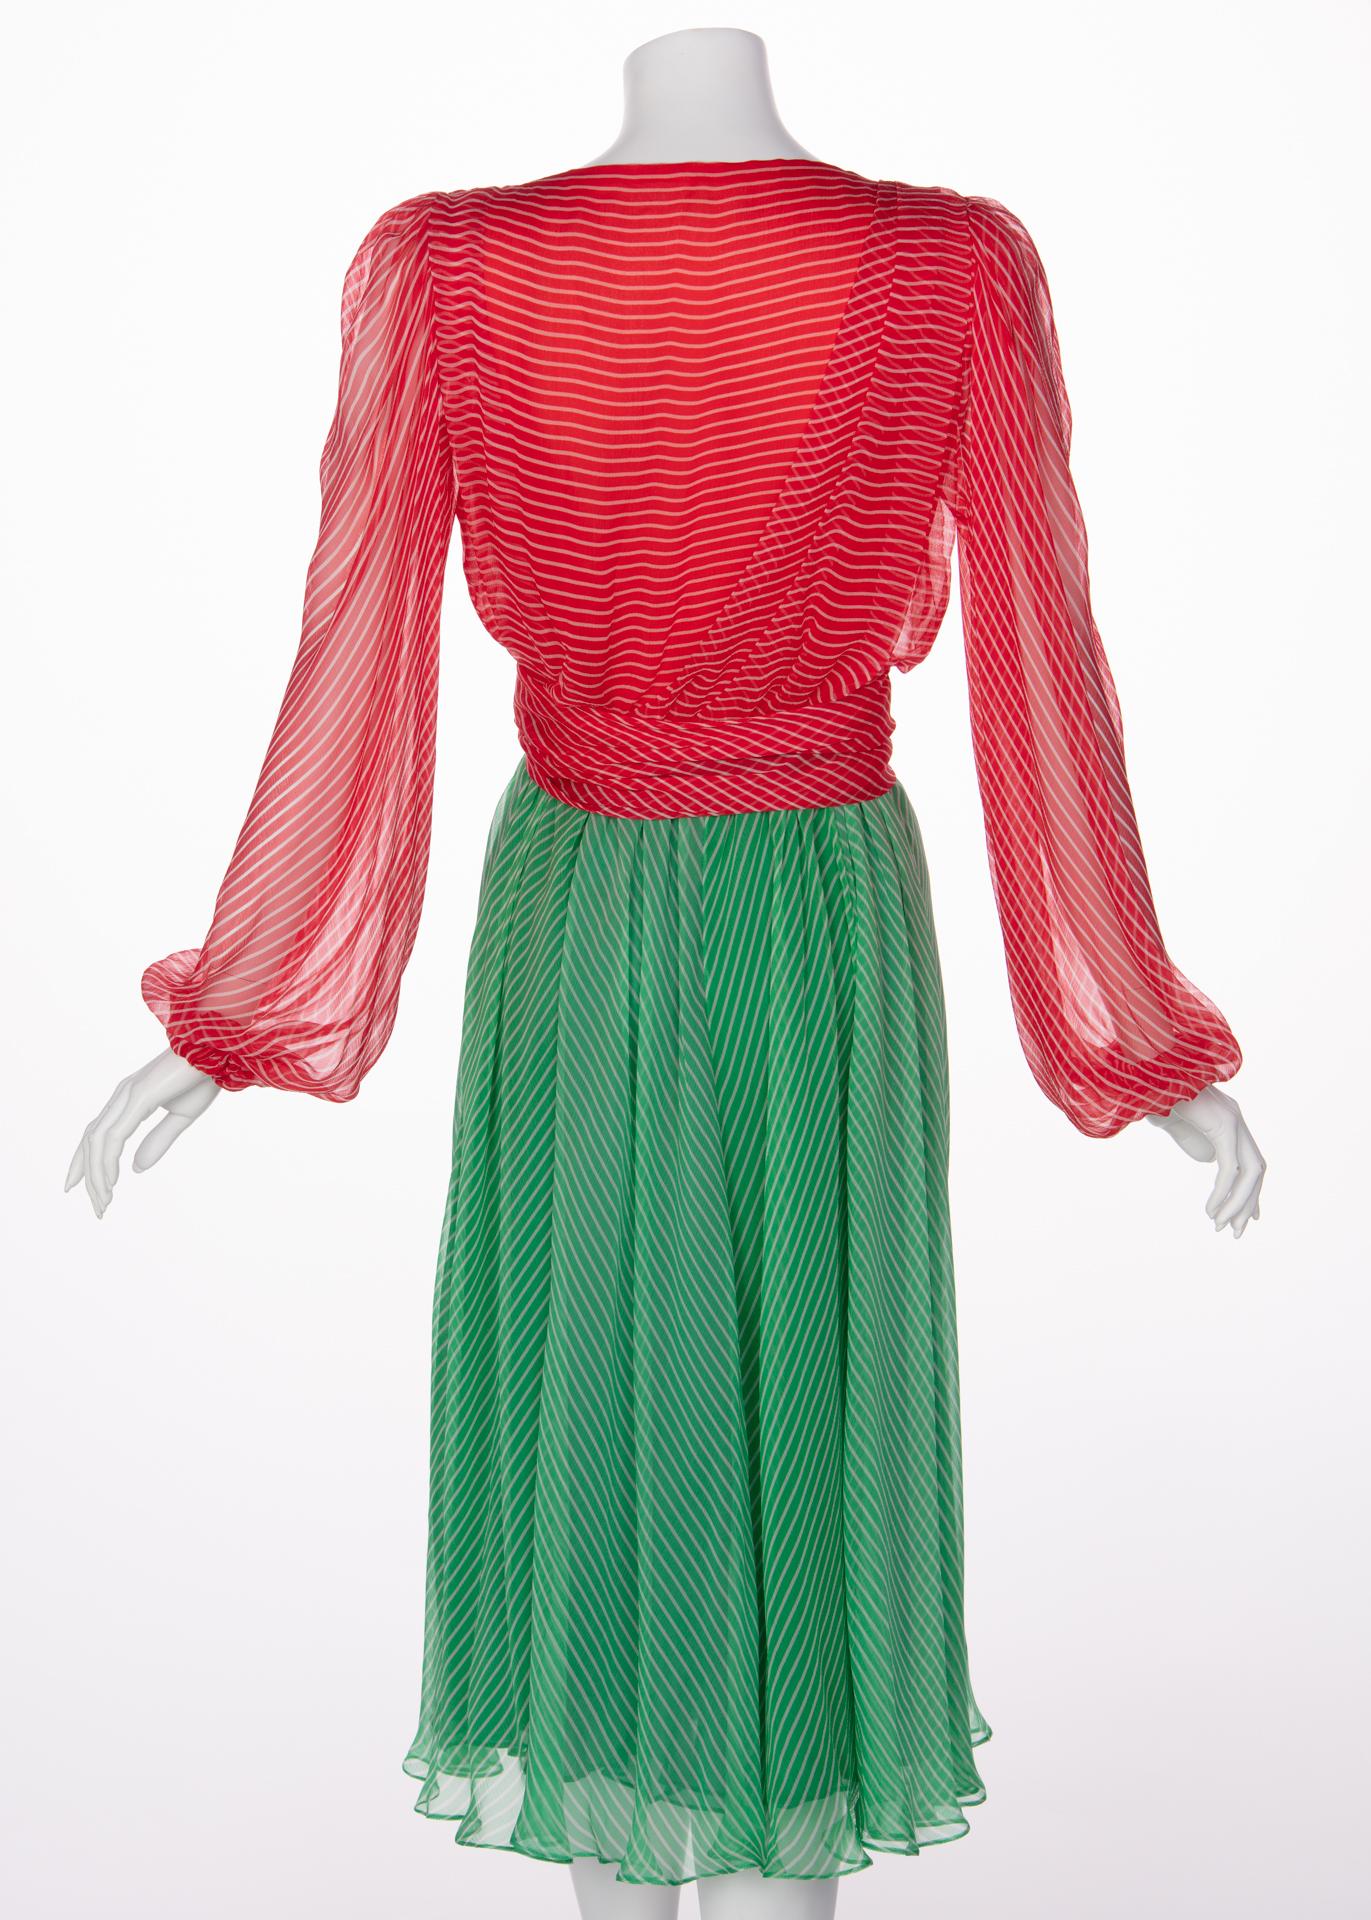 Women's Yves Saint Laurent YSL Haute Couture Red / Green Stripe Silk Chiffon Dress, 1991 For Sale